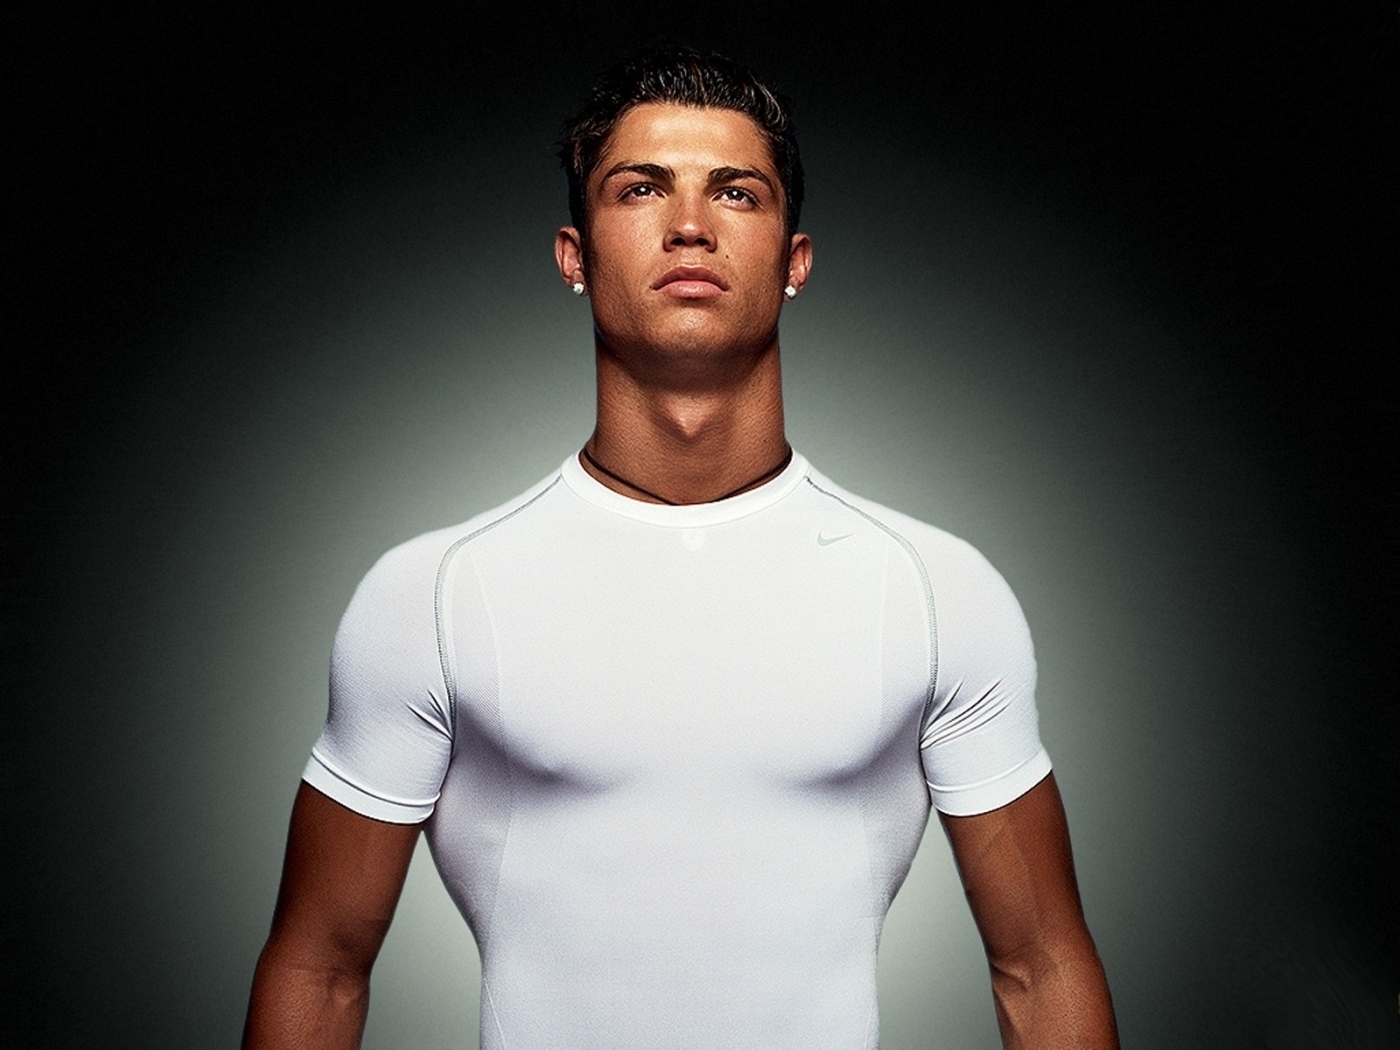 8k Cristiano Ronaldo Images